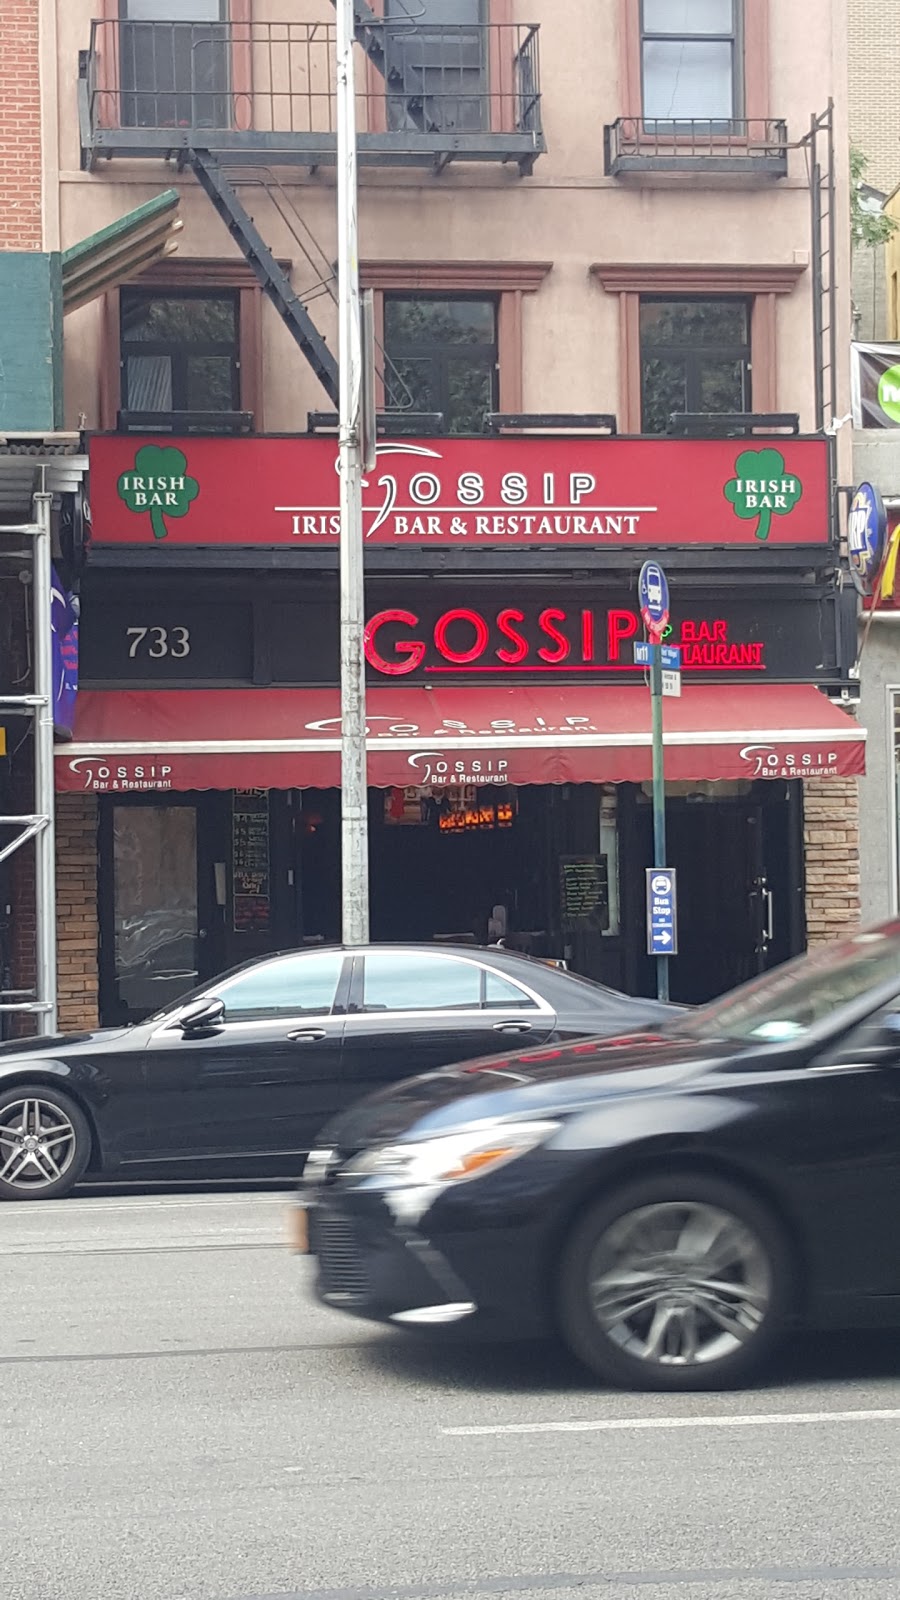 Photo of Gossip Restaurant in New York City, New York, United States - 3 Picture of Restaurant, Food, Point of interest, Establishment, Bar